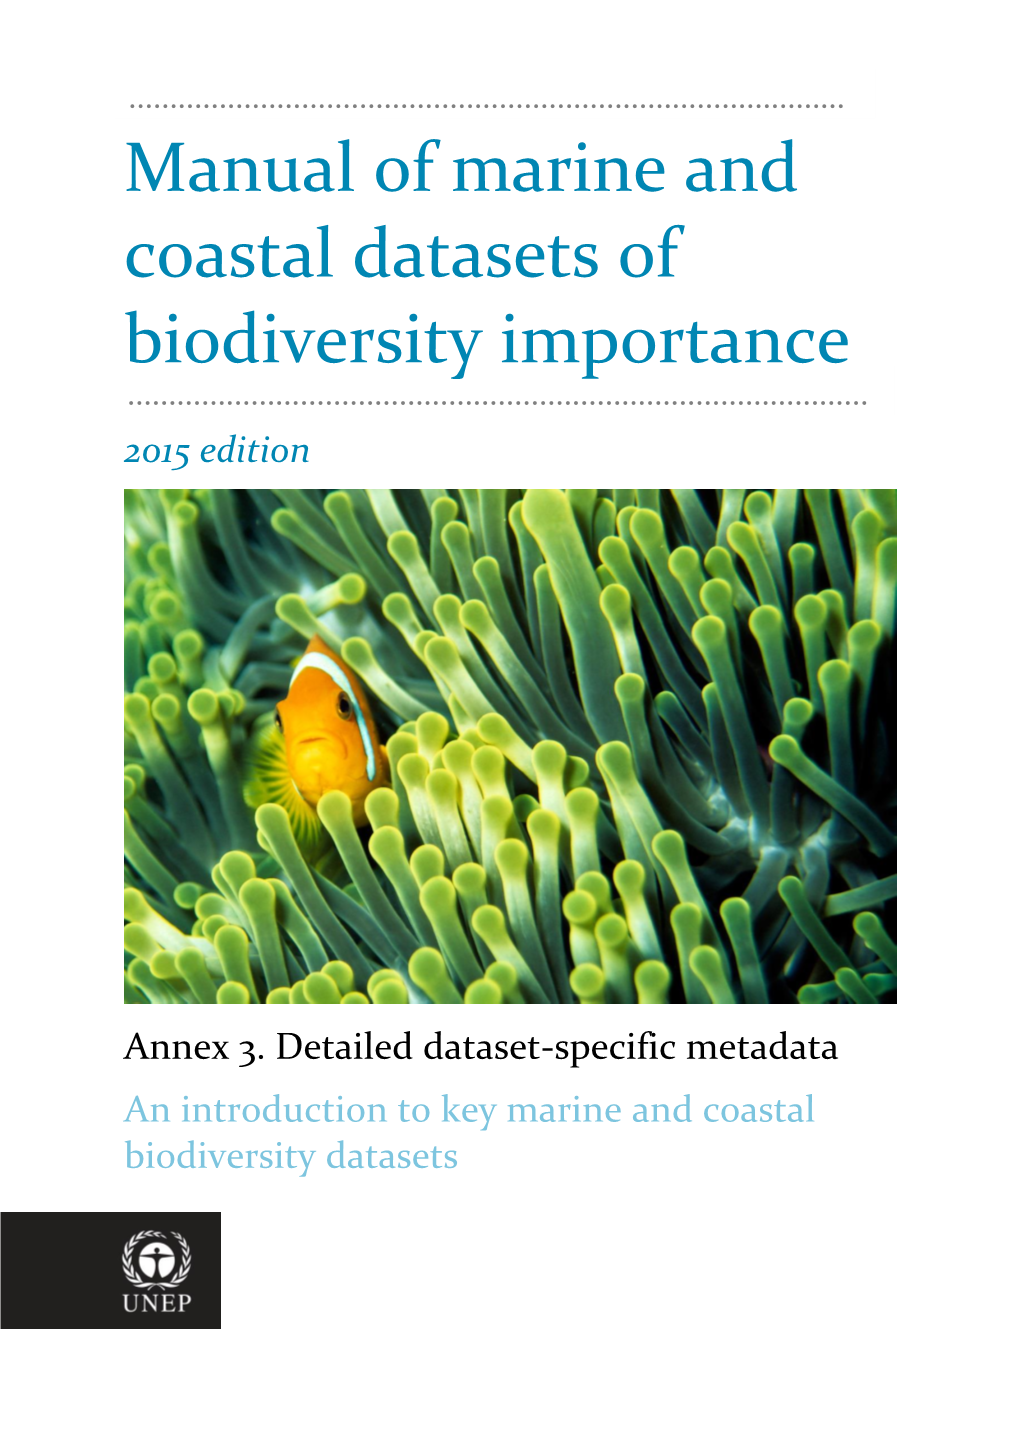 Manual of Marine and Coastal Datasets of Biodiversity Importance, 2015 Edition